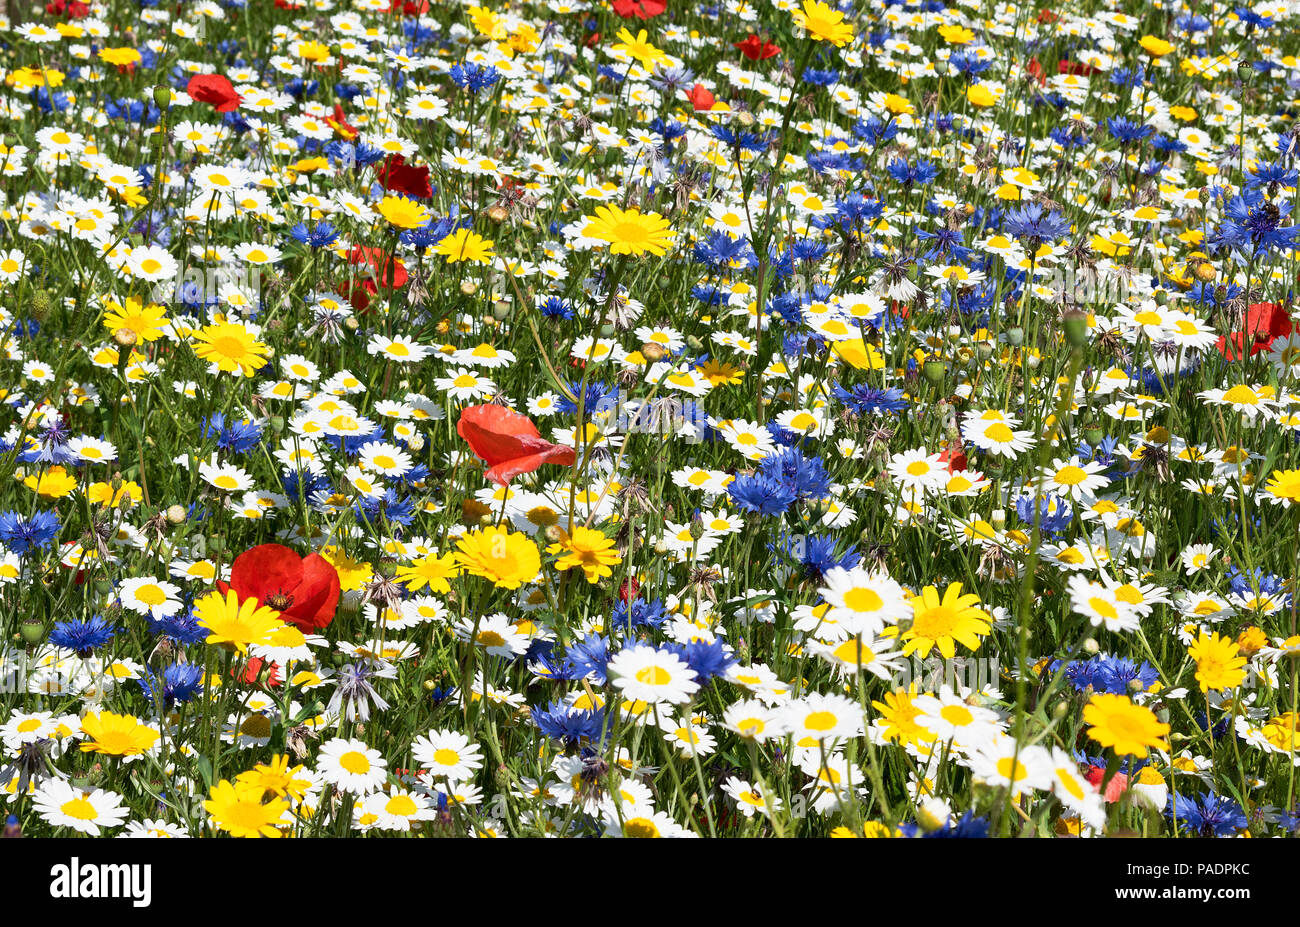 La native wild flower meadow au national Wildflower Center, Eden Project à Cornwall, Angleterre, Grande-Bretagne, Royaume-Uni. Banque D'Images